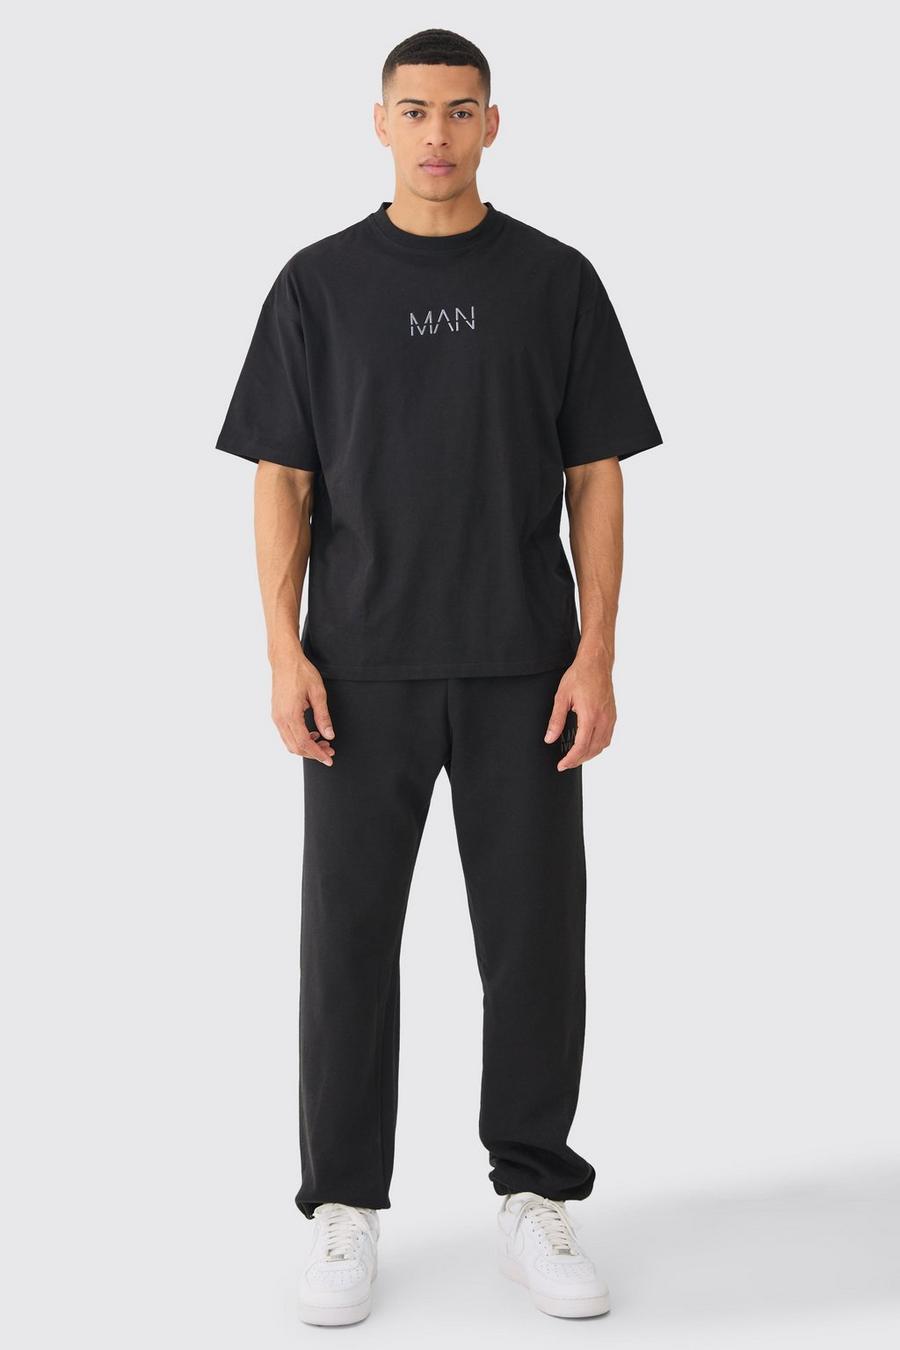 Ensemble oversize avec t-shirt et jogging - MAN, Black image number 1